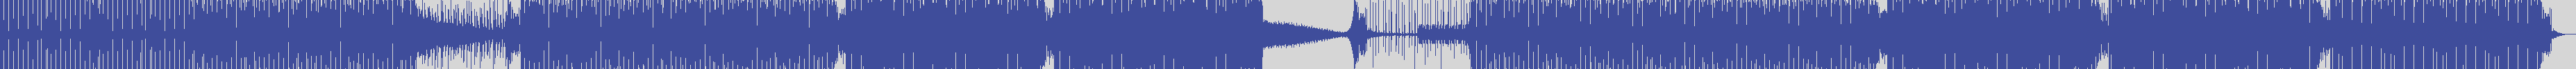 atomic_recordings [AR001] Enrico Persi, Luca Fregonese - New Thing [Klub Mix] audio wave form